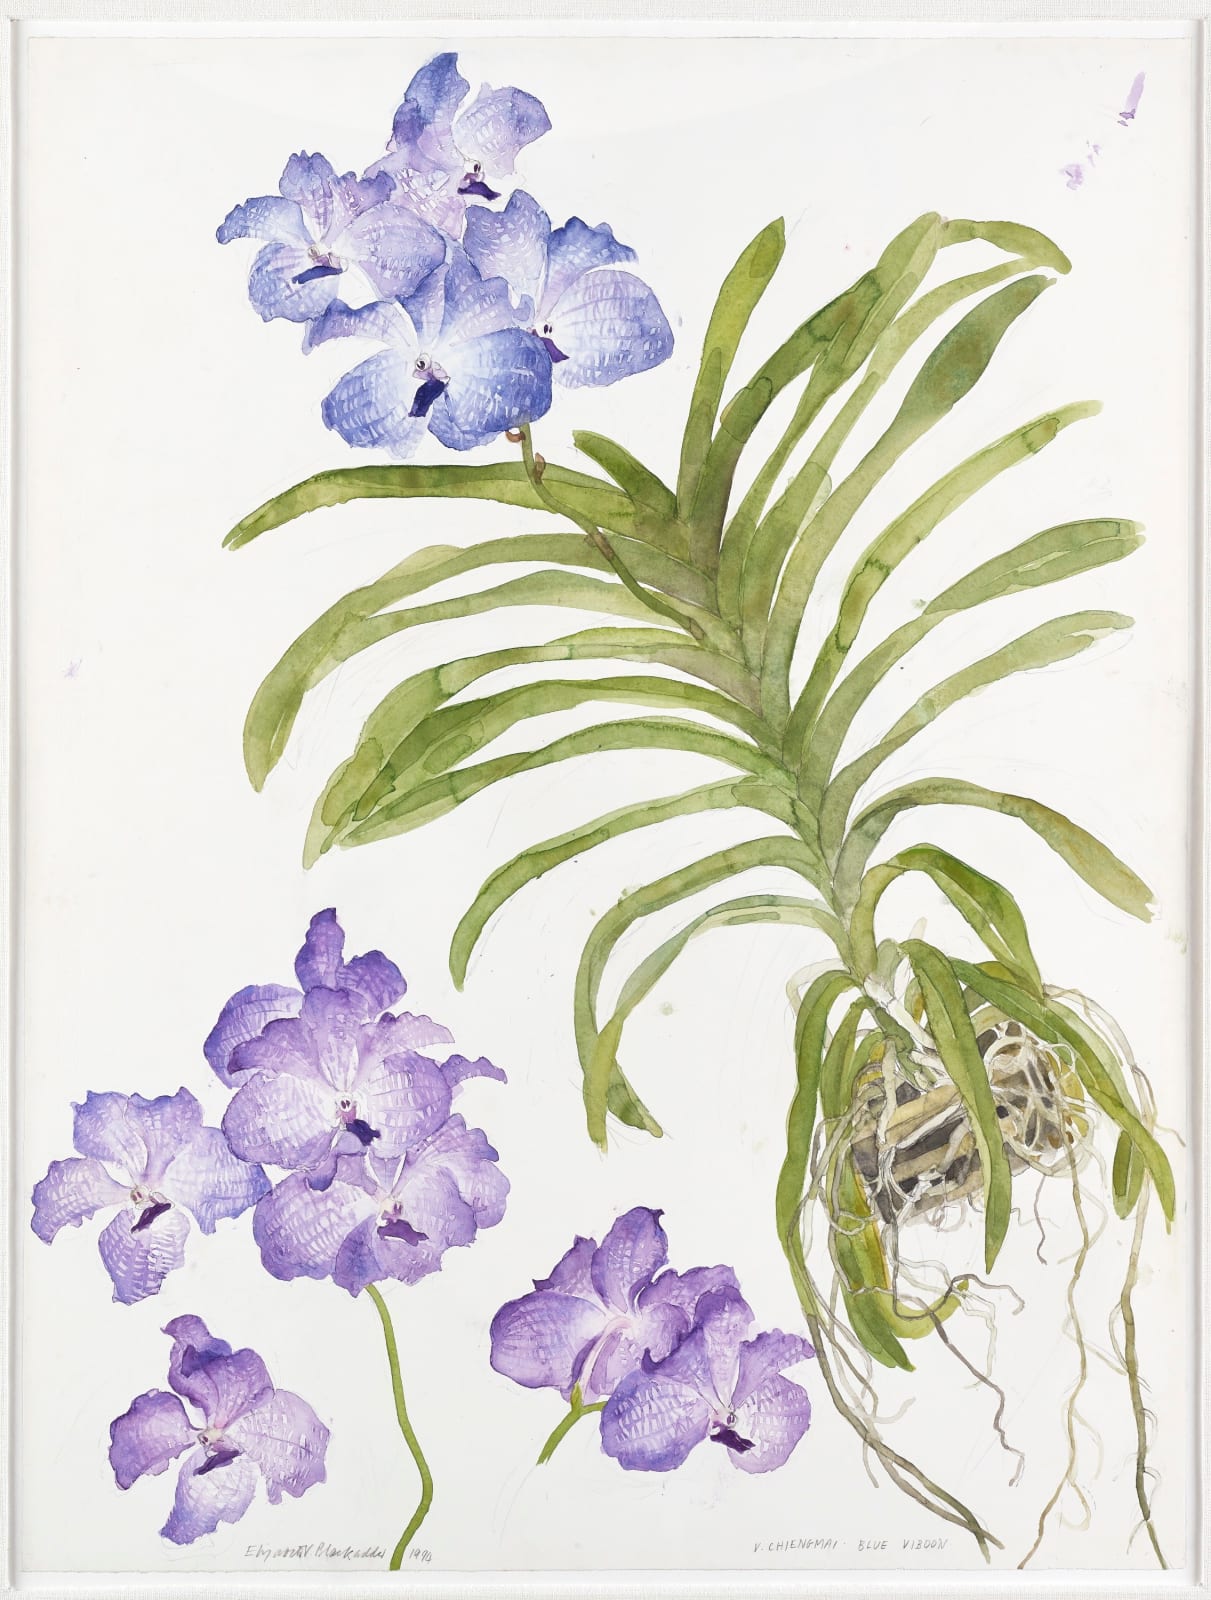 ELIZABETH BLACKADDER, Blue orchid vanda chiengmai, blue viboon, 1994